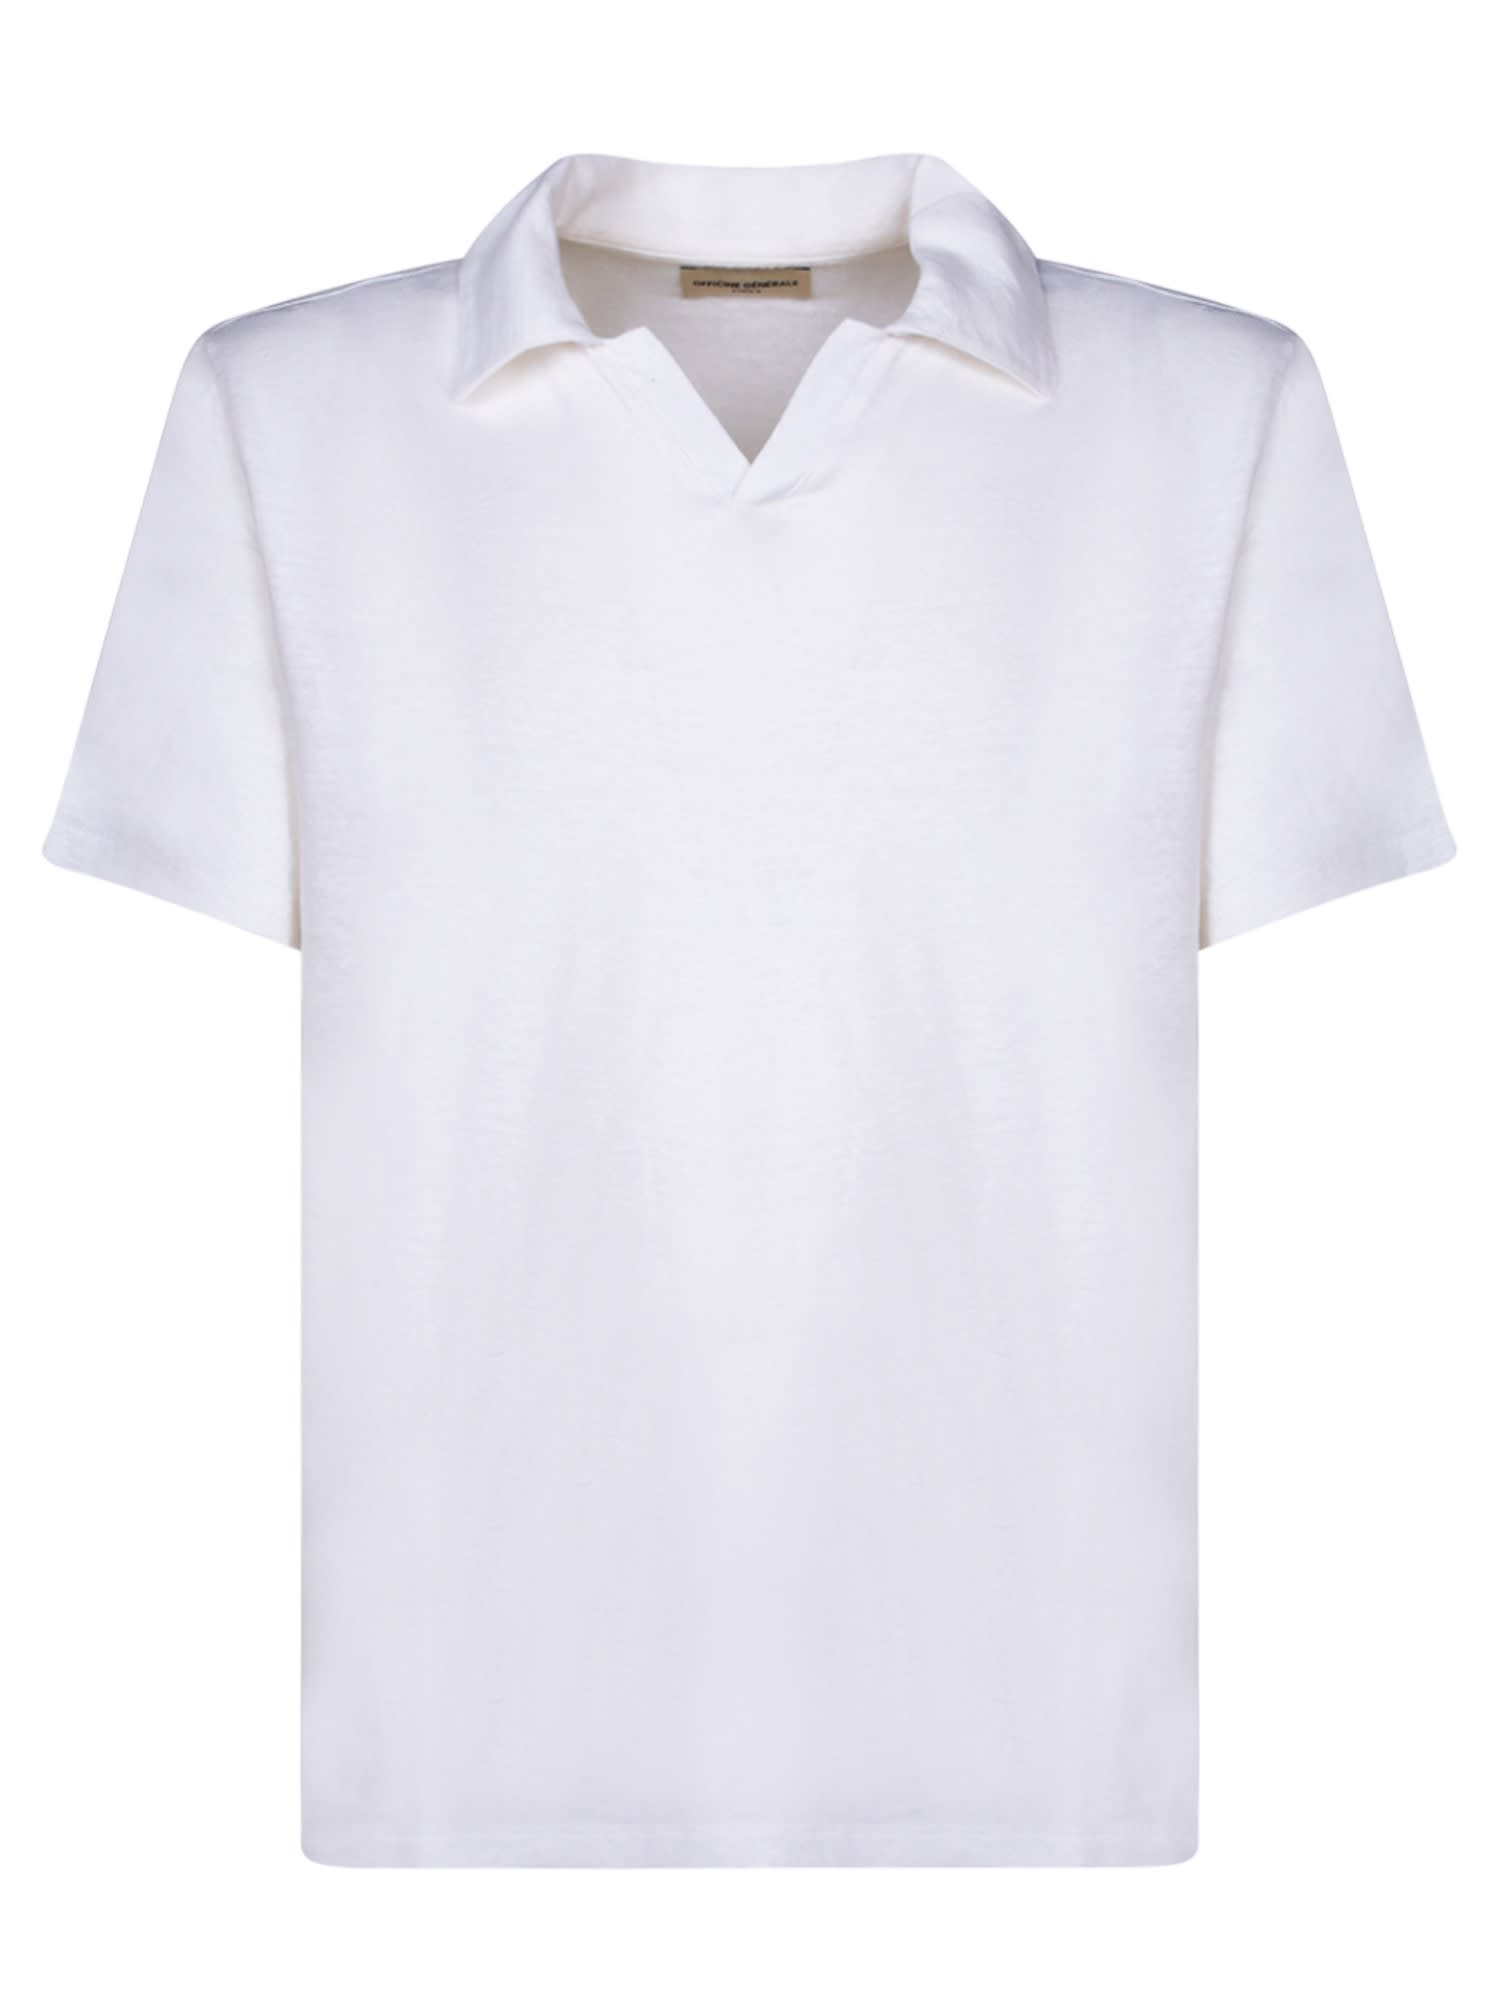 Officine Générale Short Sleeves White Polo Shirt